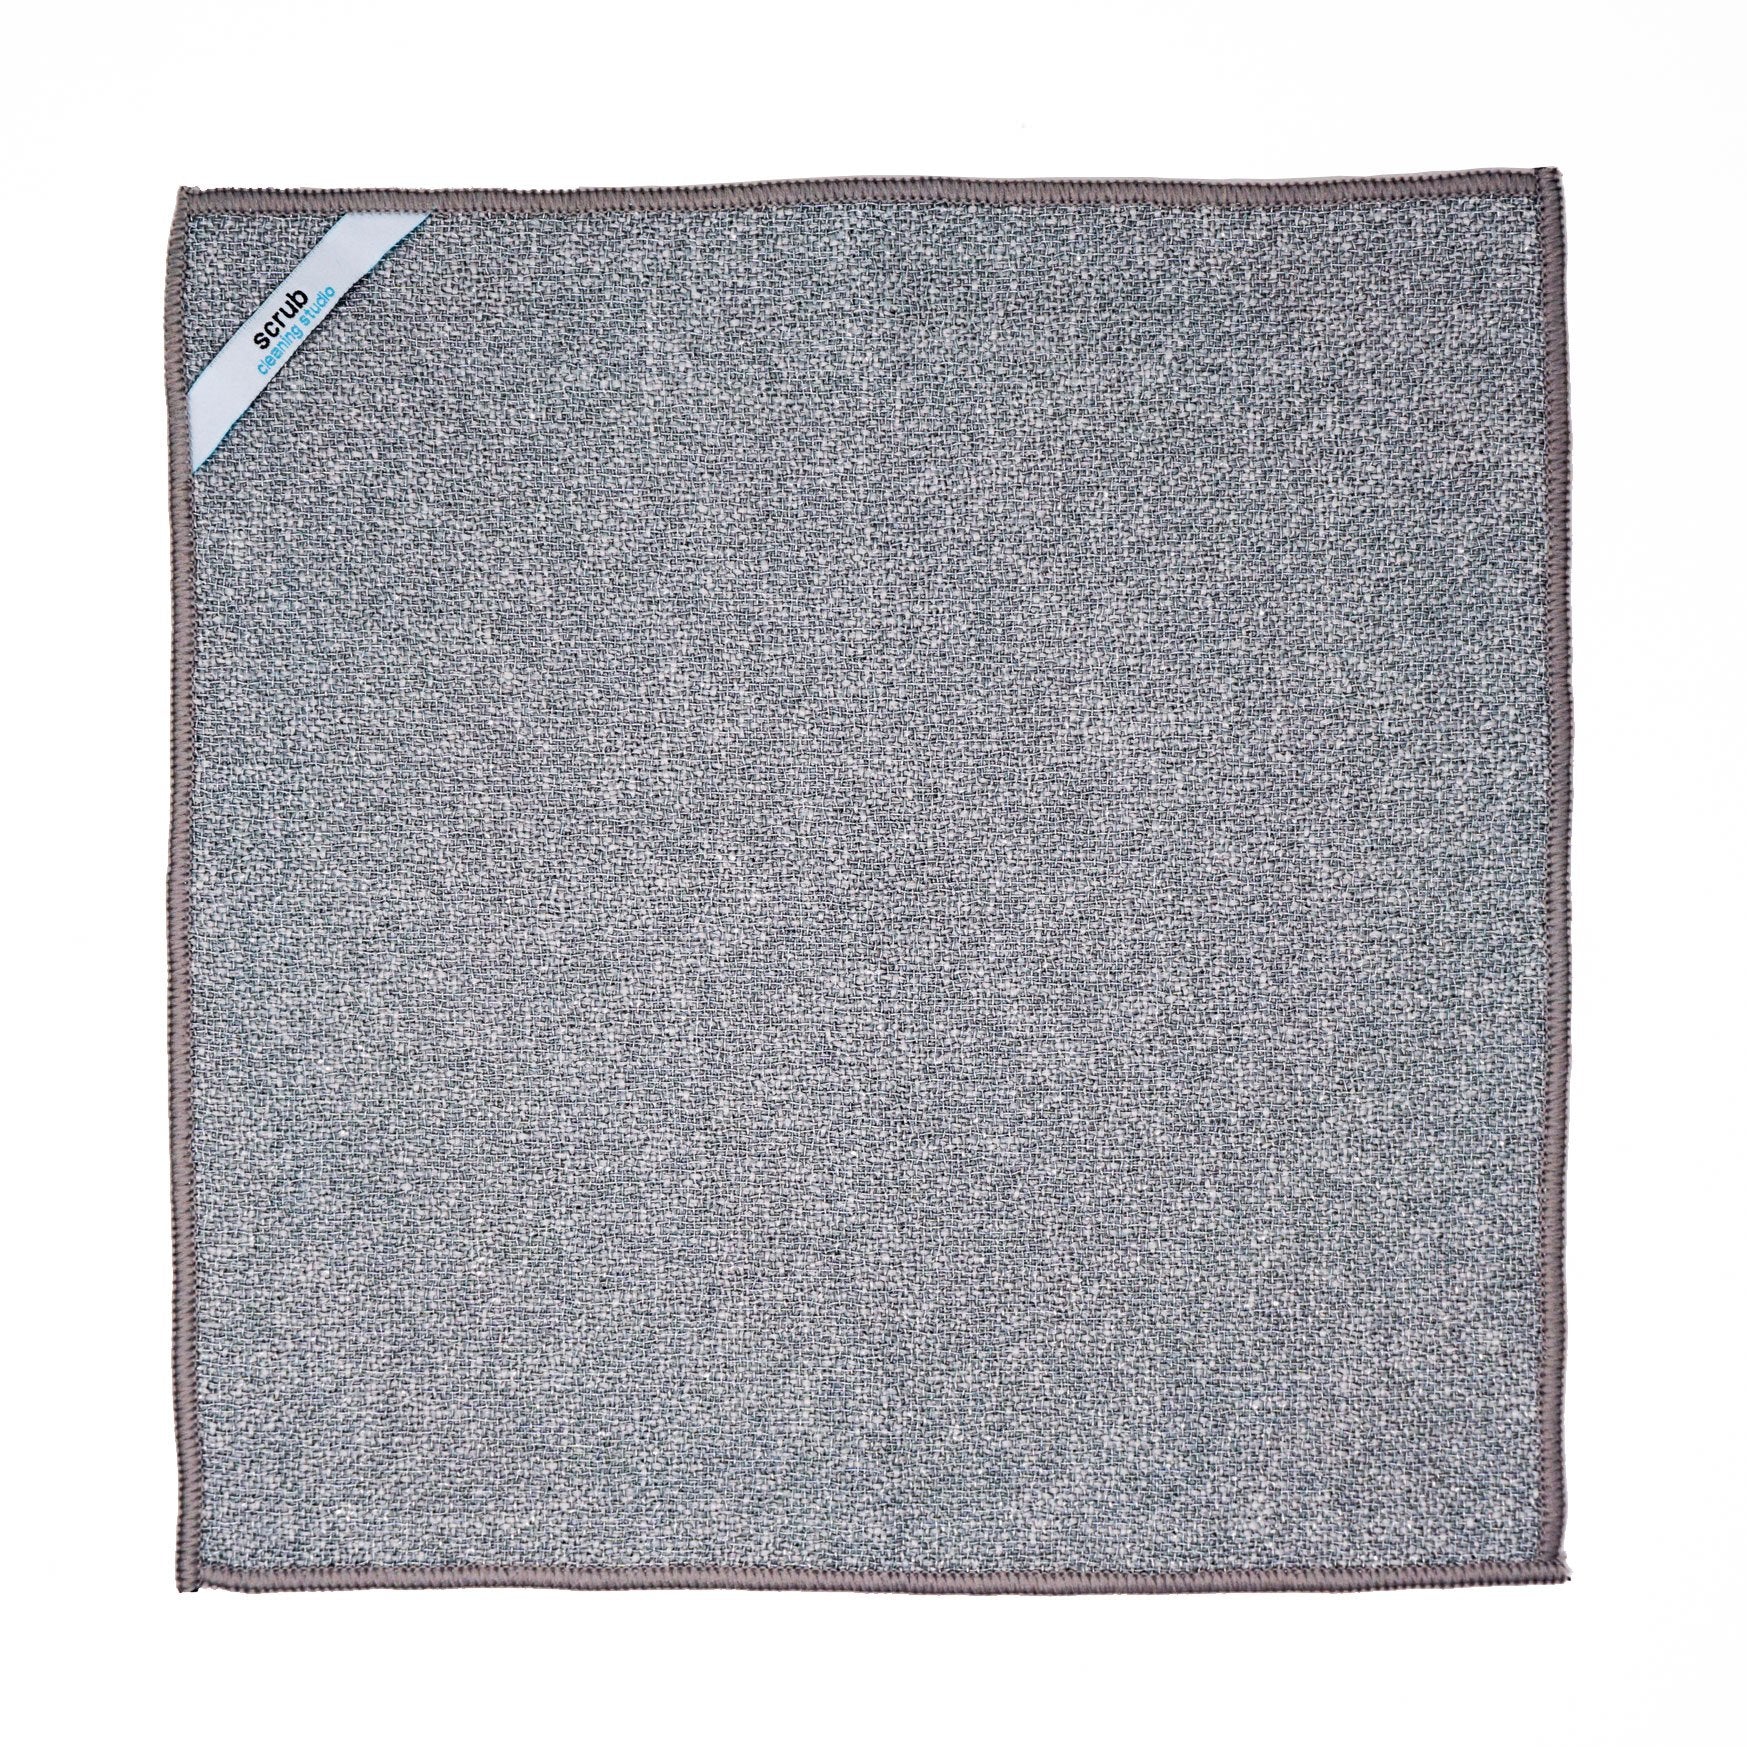 Premium Microfiber Cleaning Cloth - Kit - Kind Designs